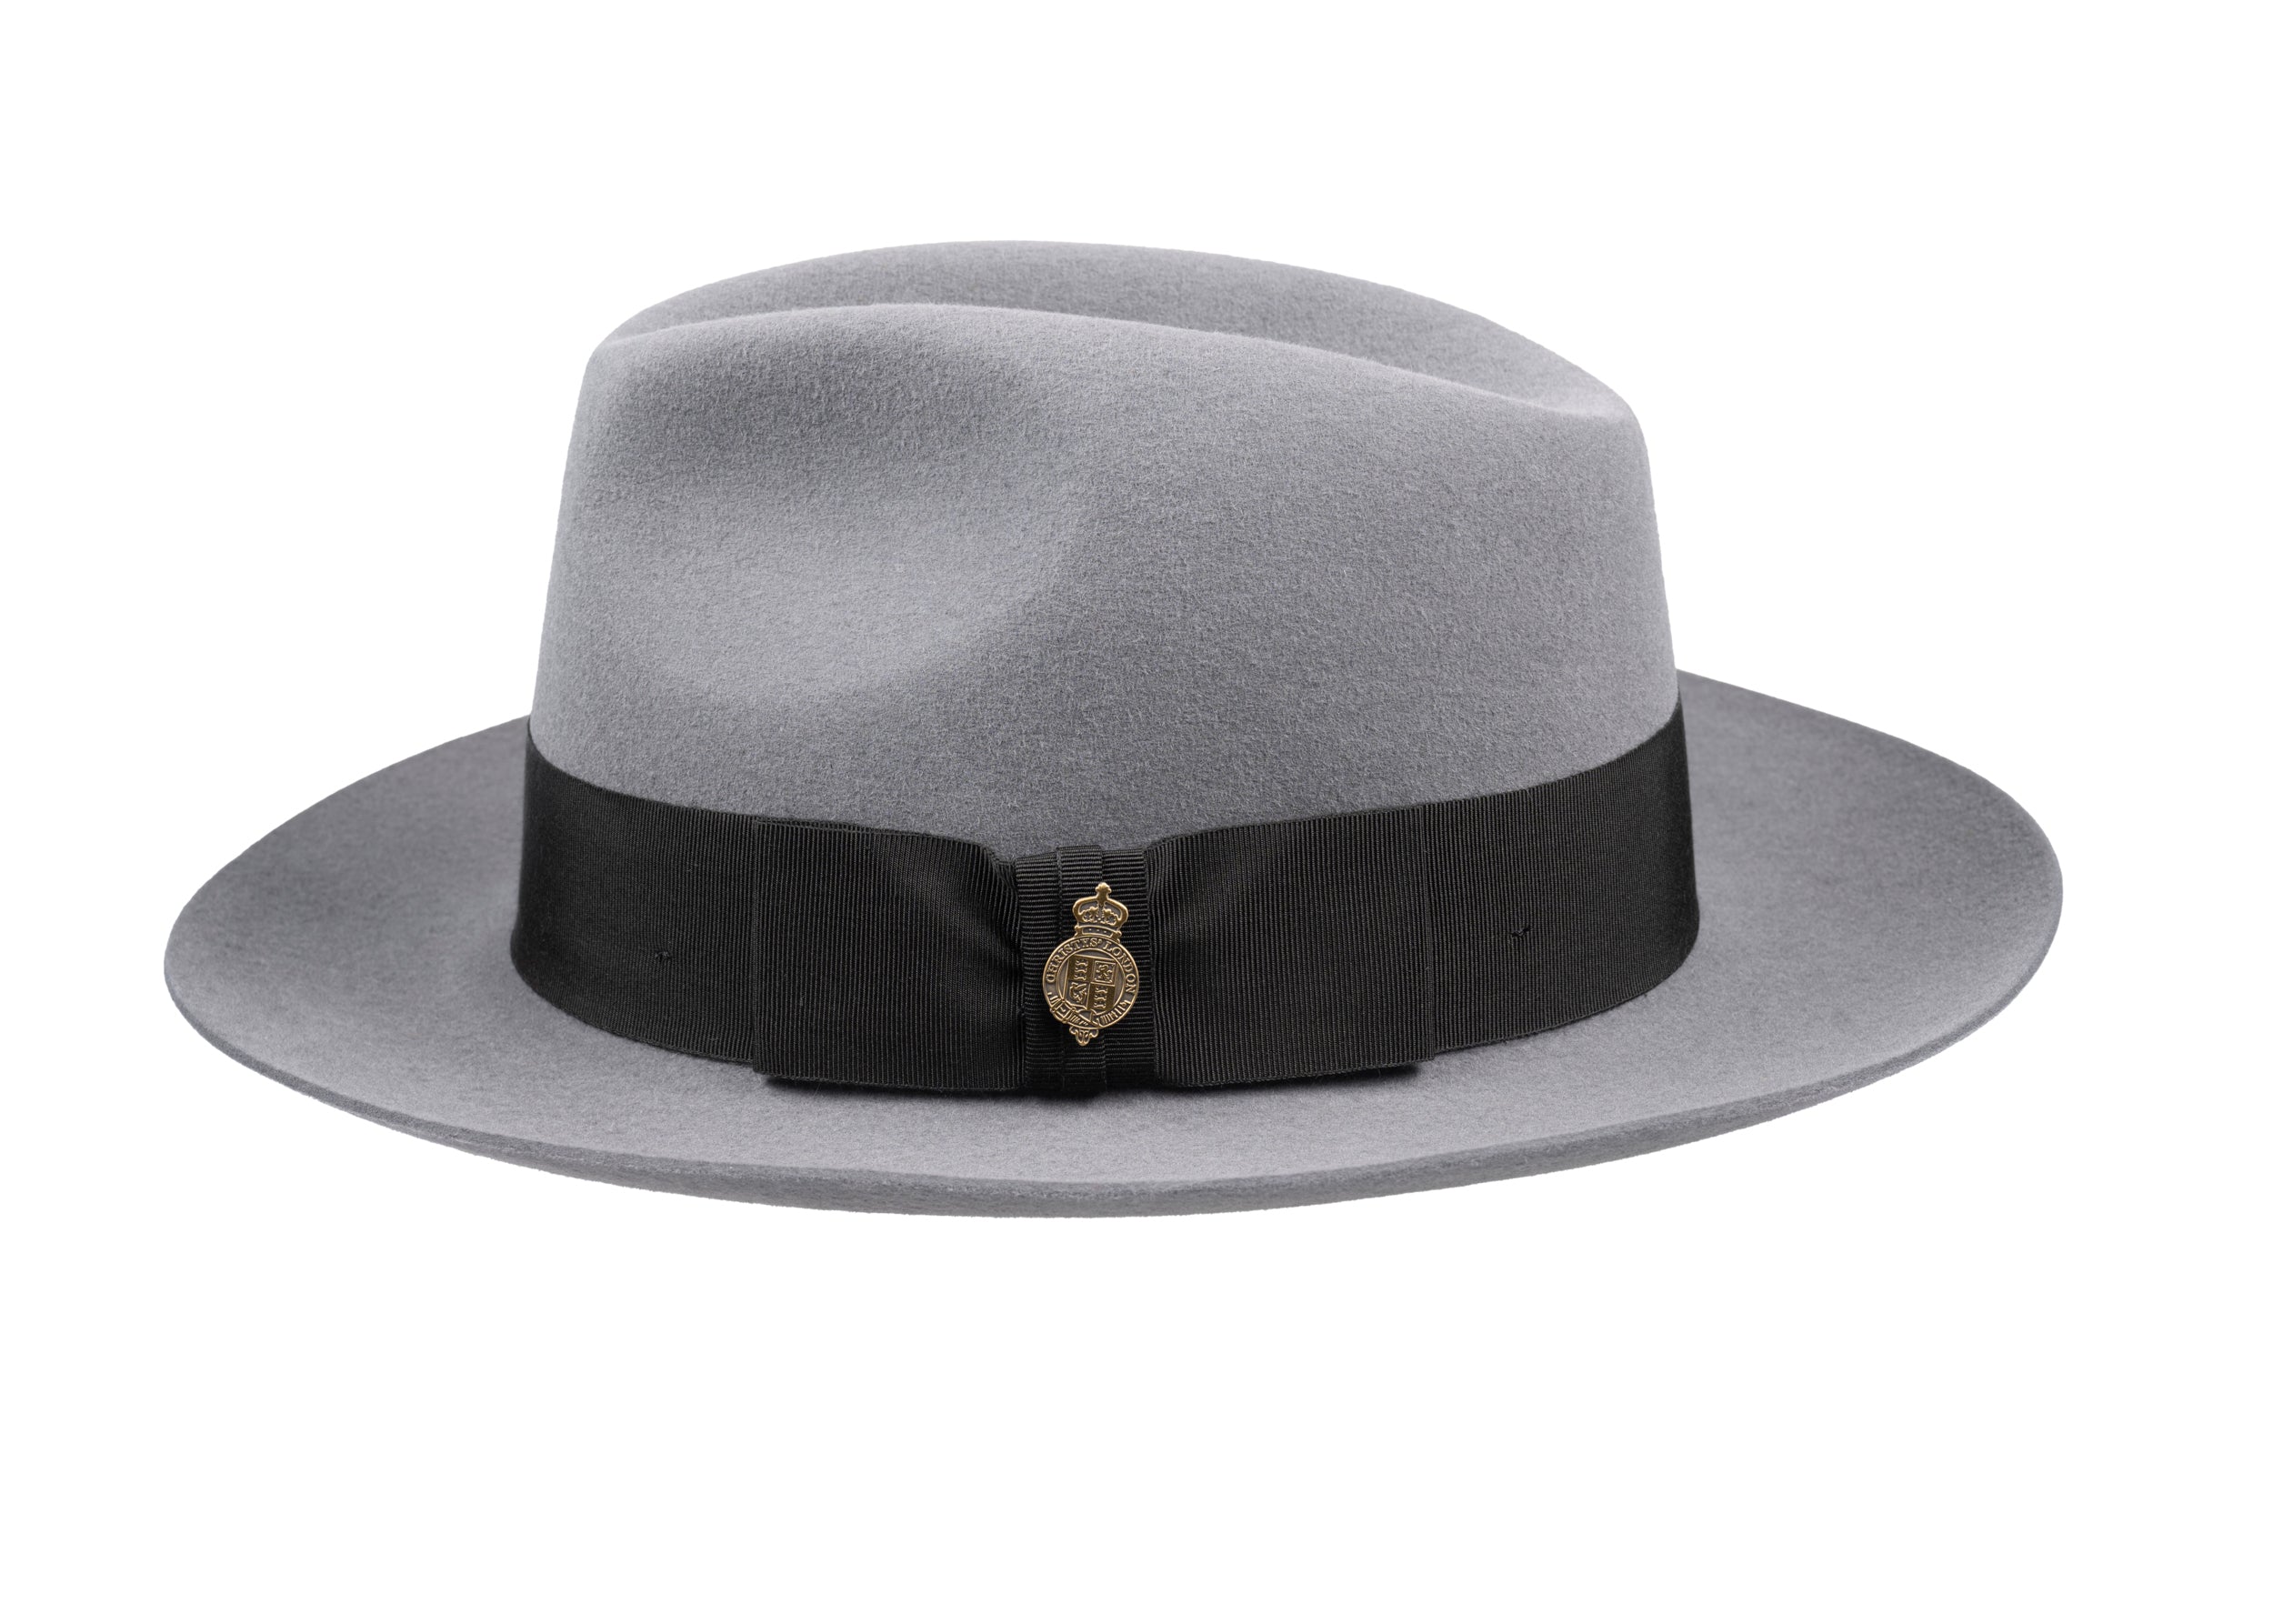 Knightsbridge Fur Felt Fedora Hat